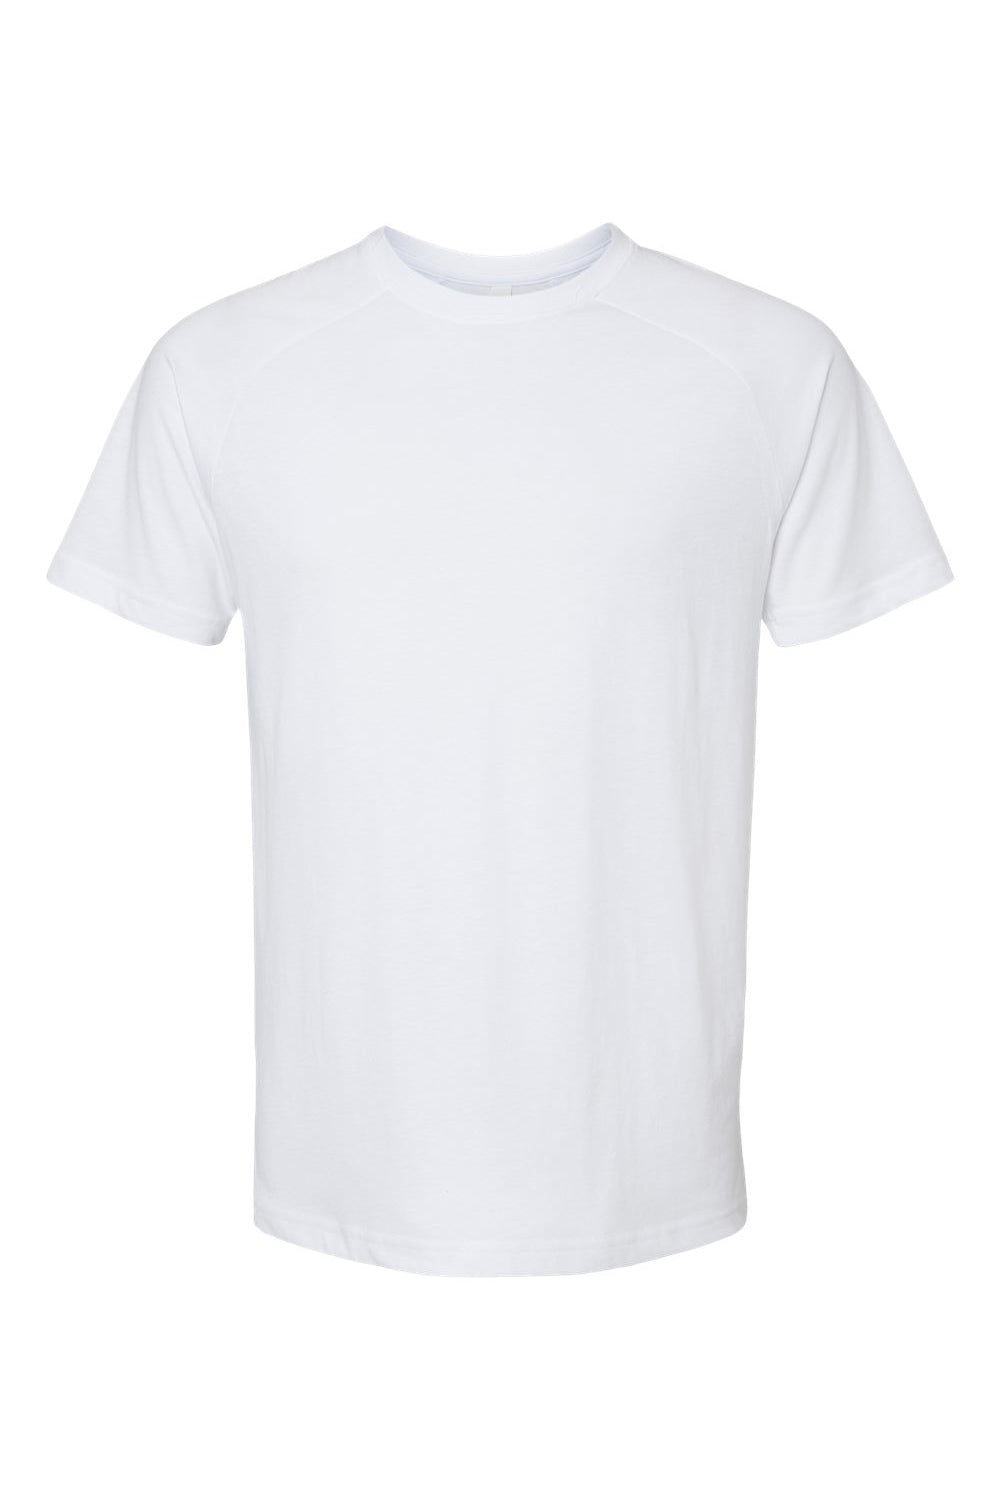 Bella + Canvas 3201 Mens CVC Raglan Short Sleeve Crewneck T-Shirt Solid White Flat Front